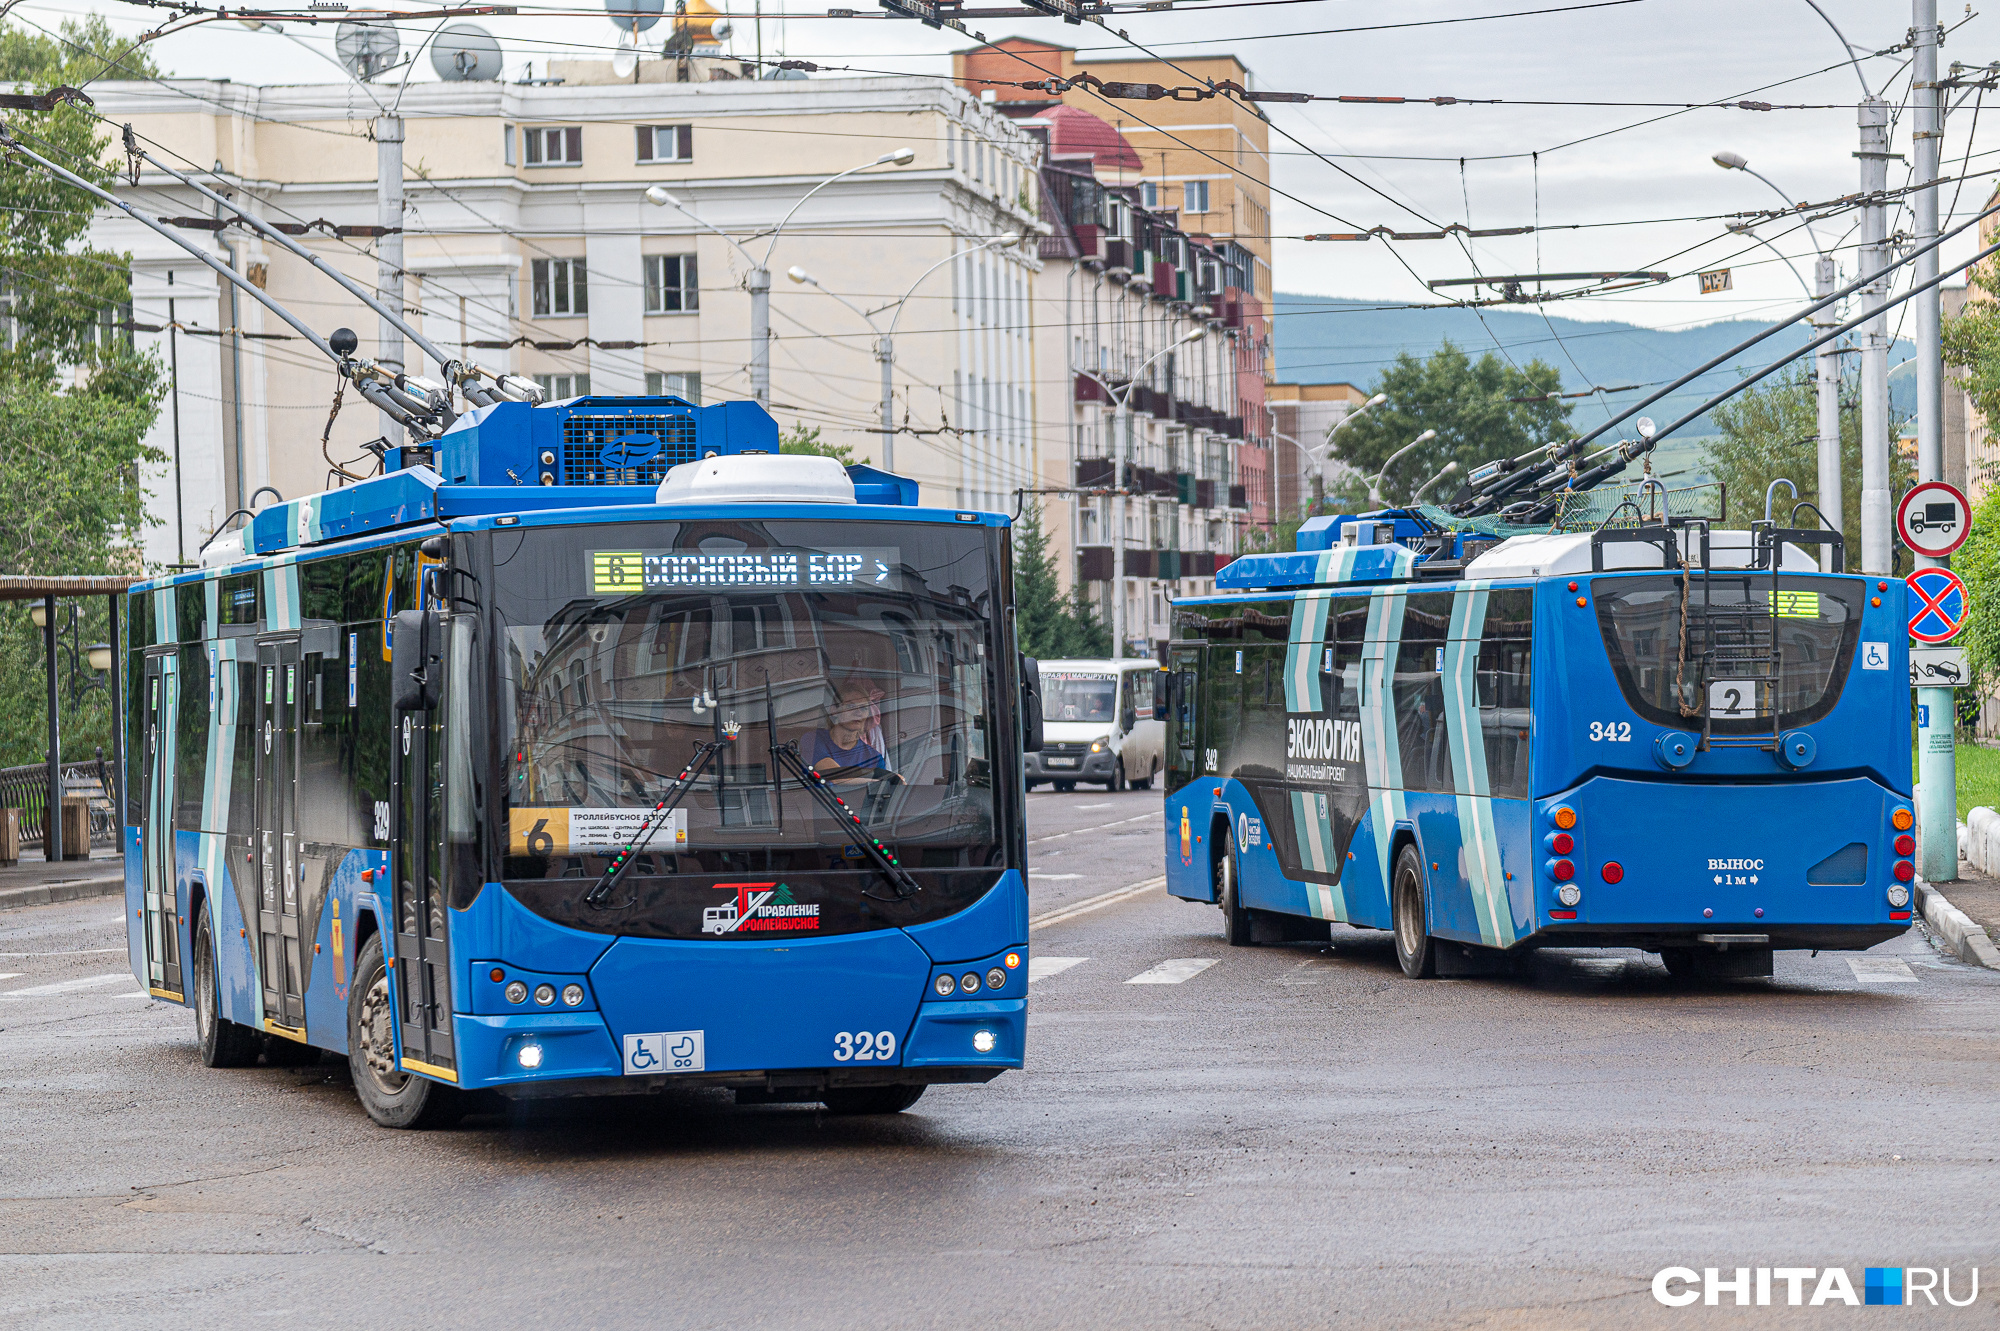 Троллейбусы до Каштака в Чите не запустили 28 ноября, хотя обещали